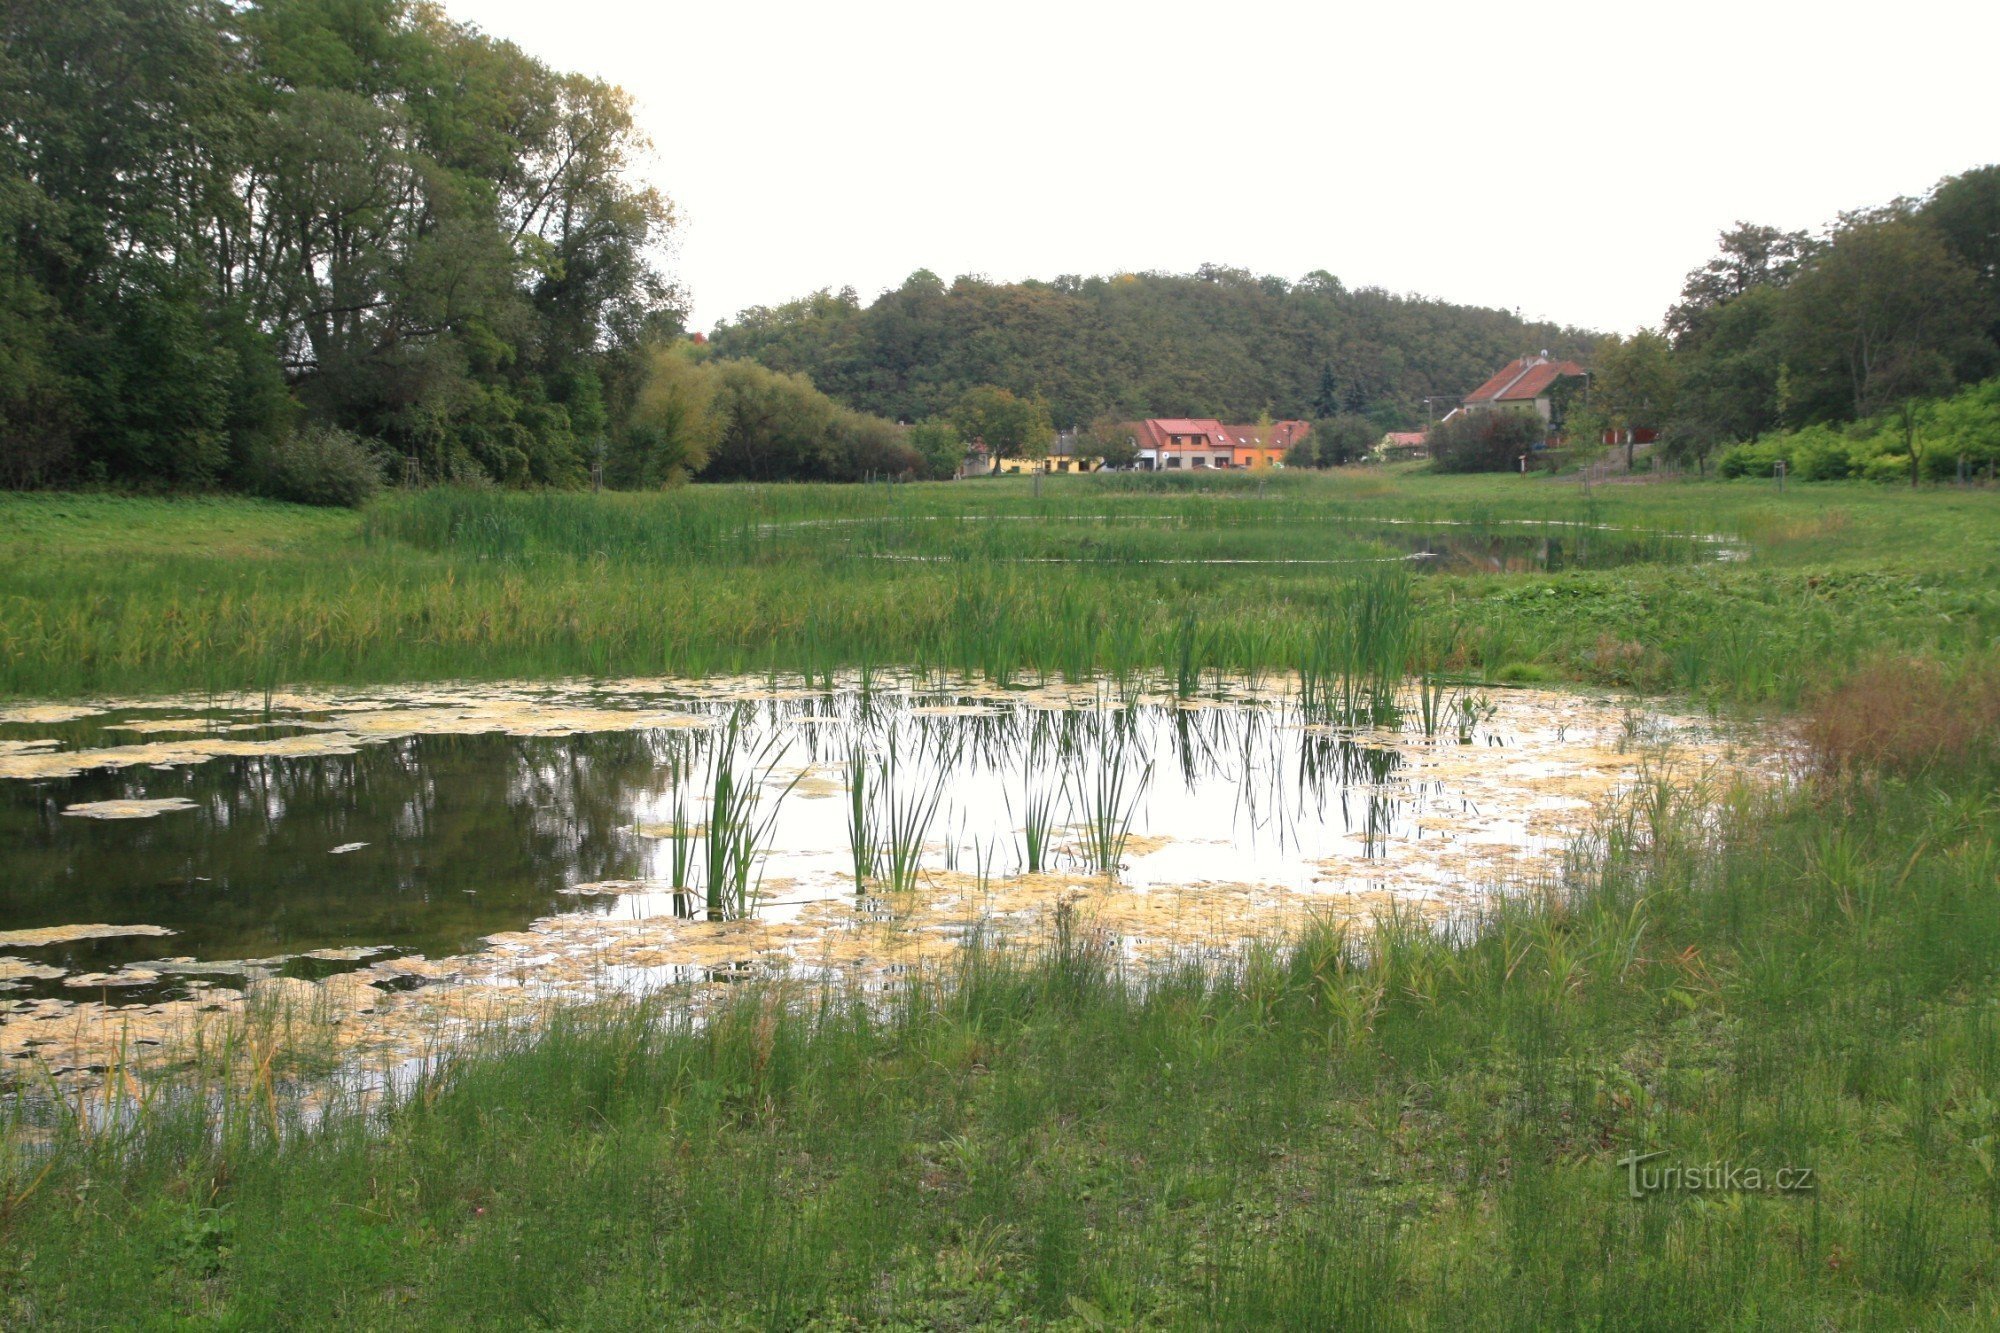 Prštice - wetland